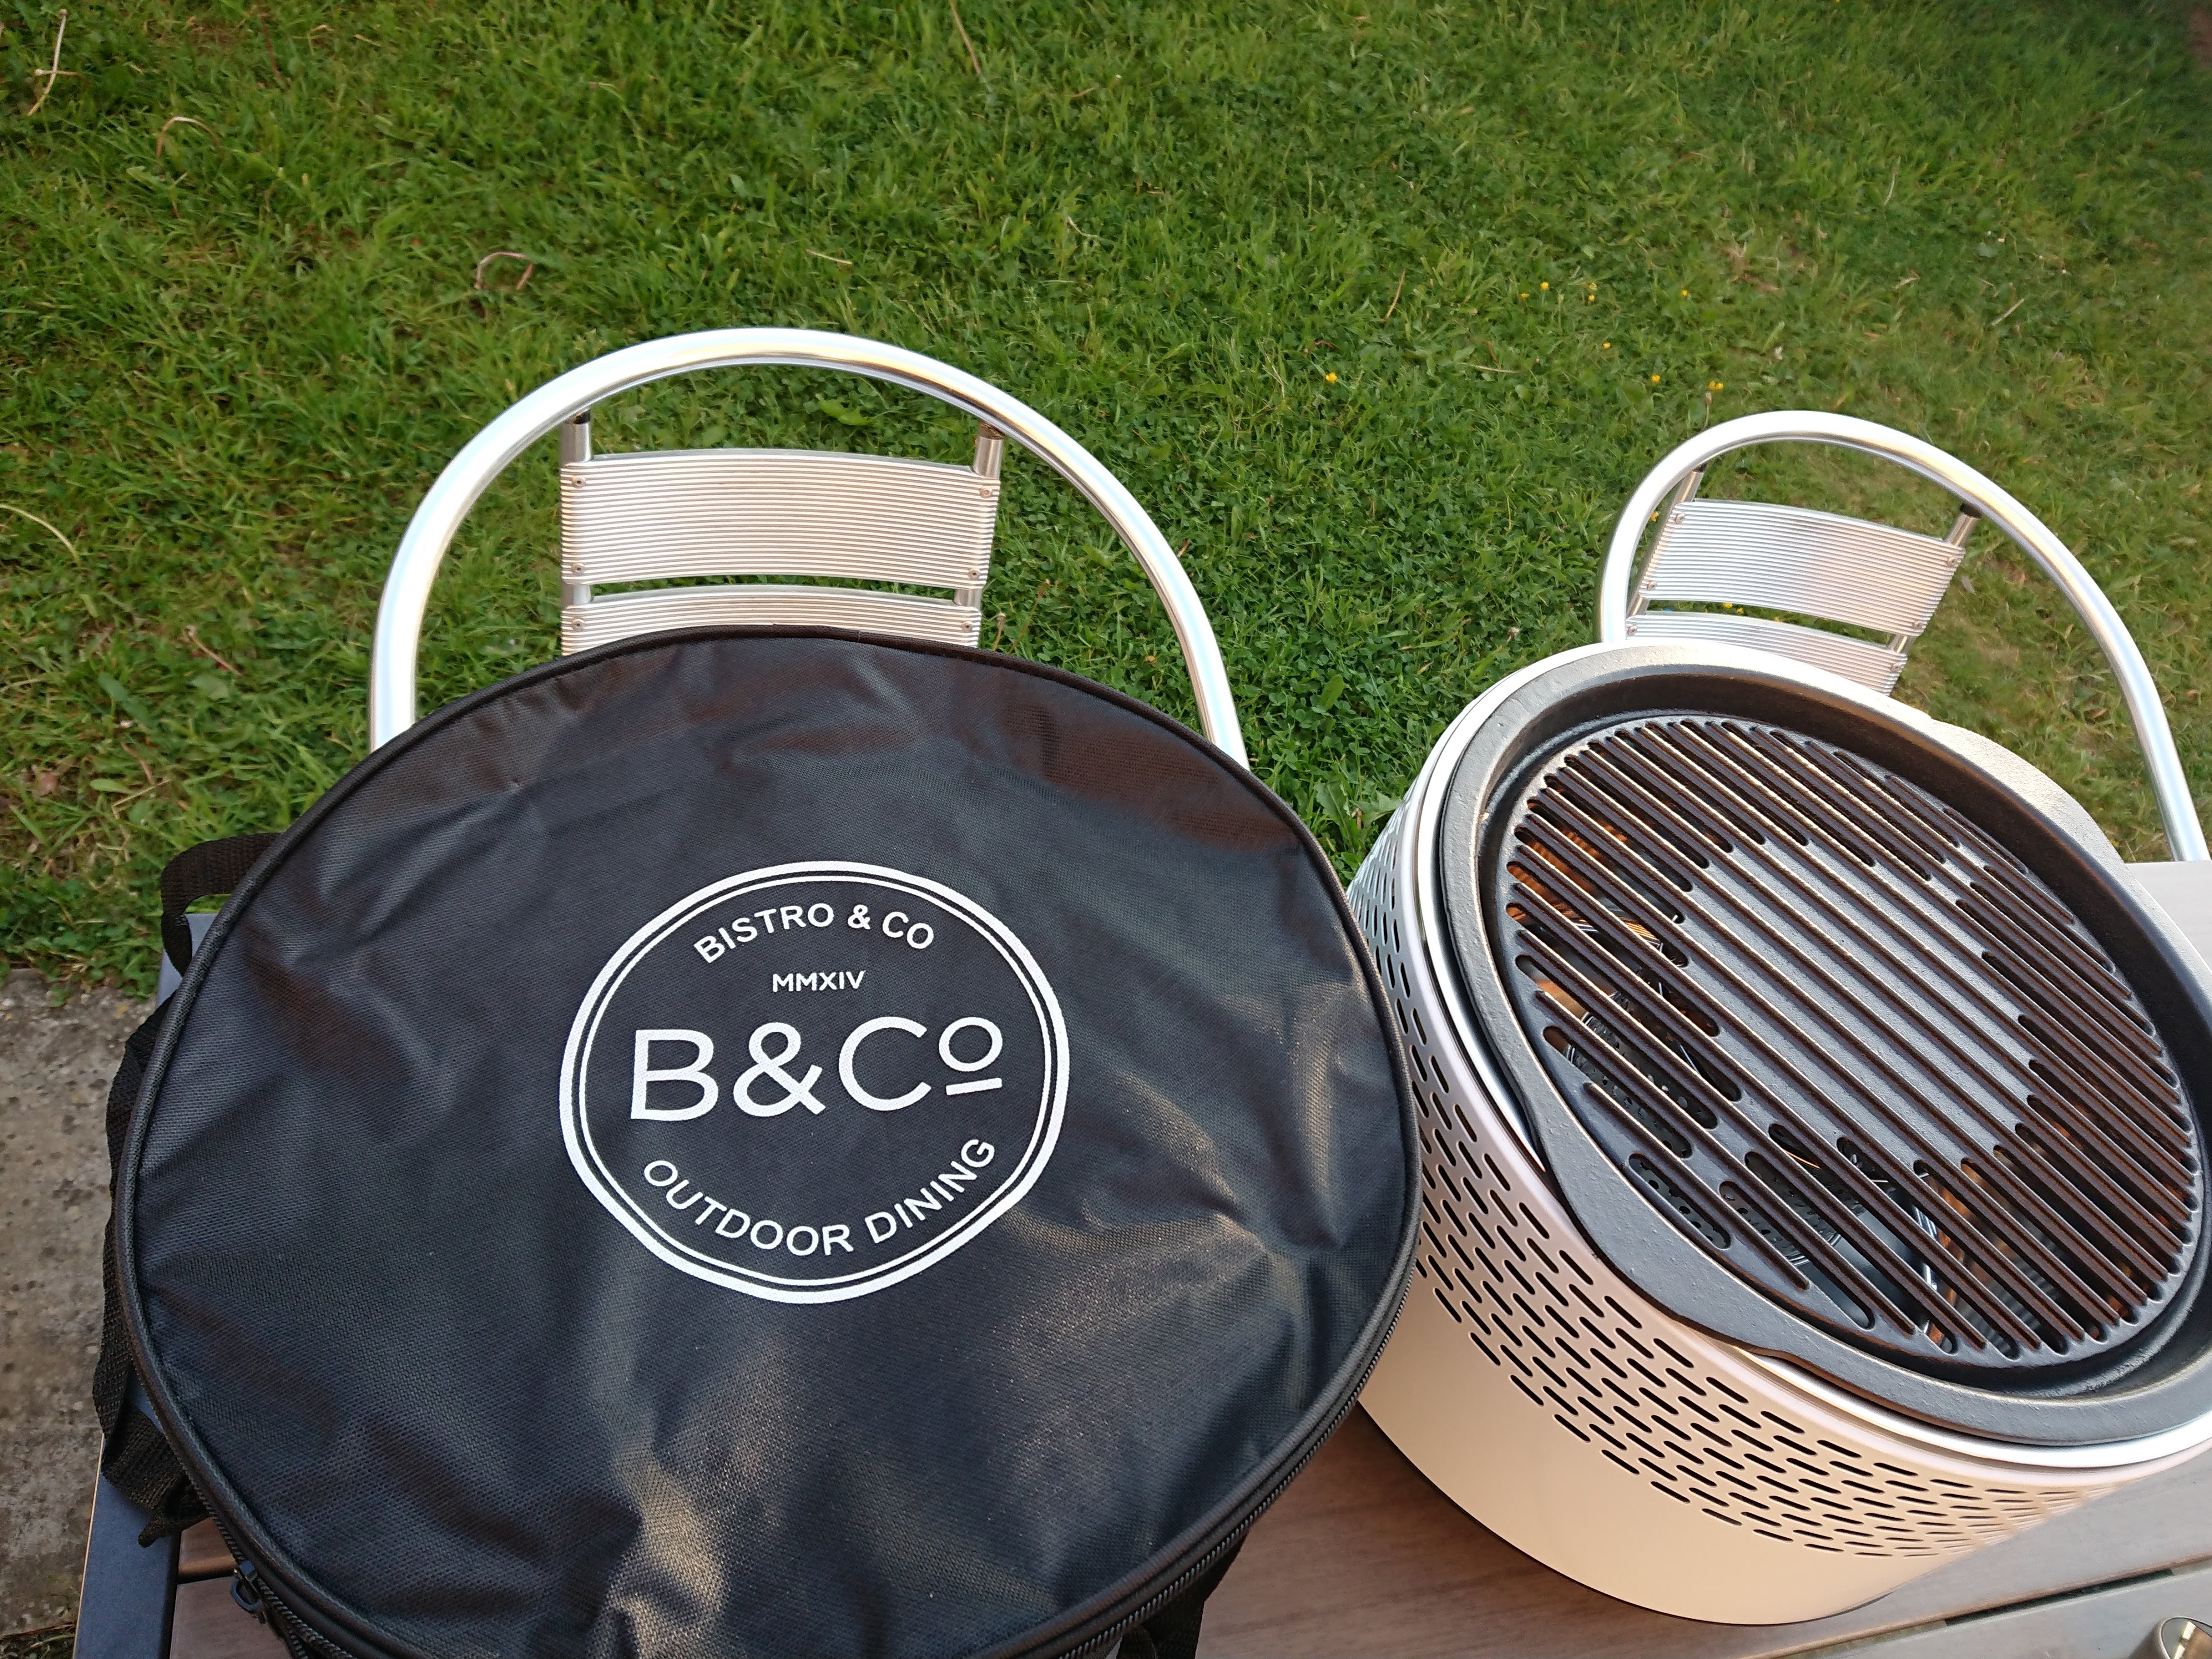 B&Co Summit International Smokless Camping Barbecue